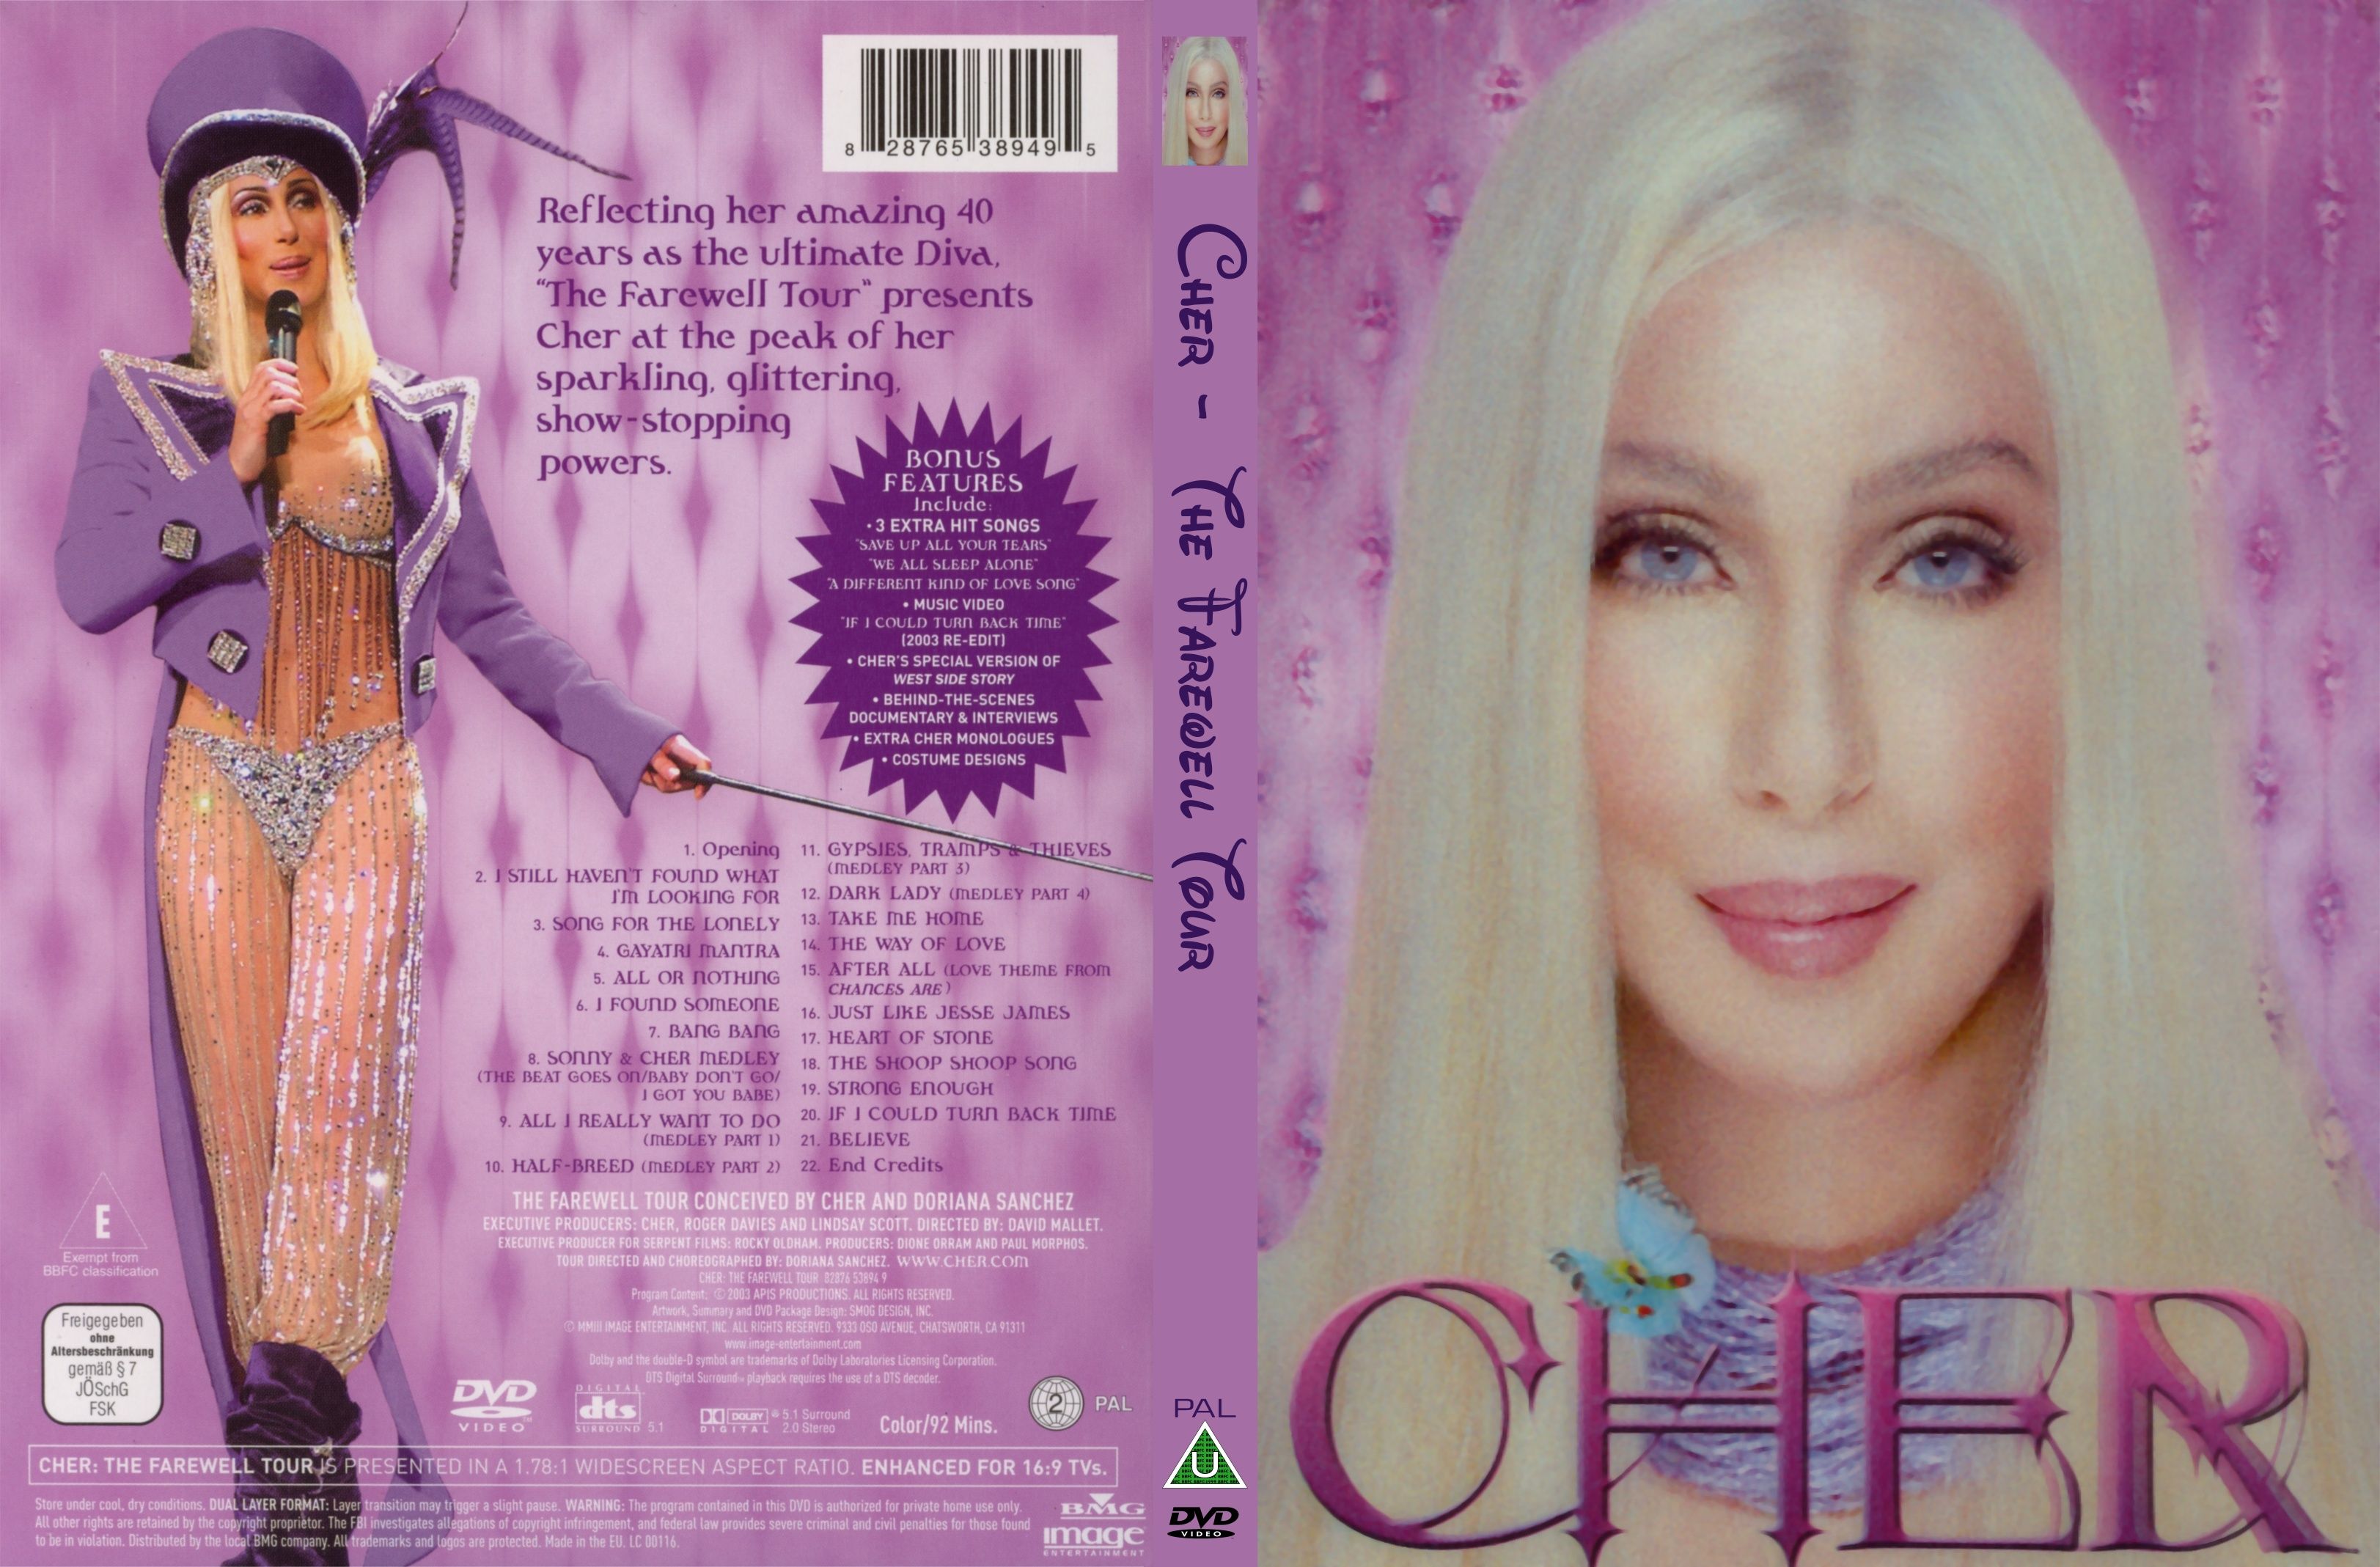 Farewell Tour. Cher афиша. Cher DVD картинки. Шер песня стронг